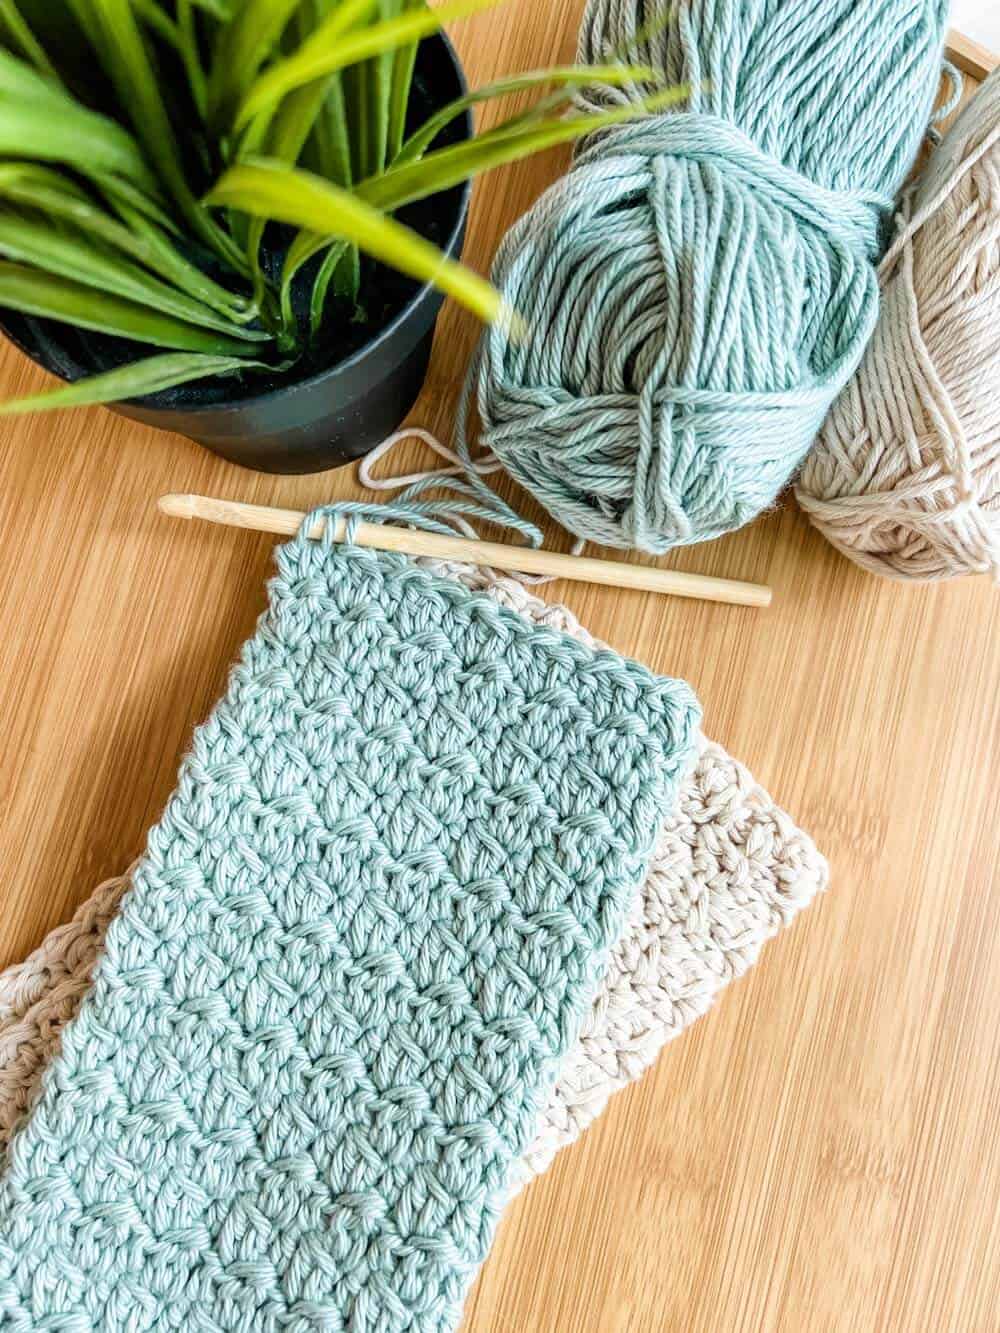 Crochet A Year of Dishcloths • Oombawka Design Crochet